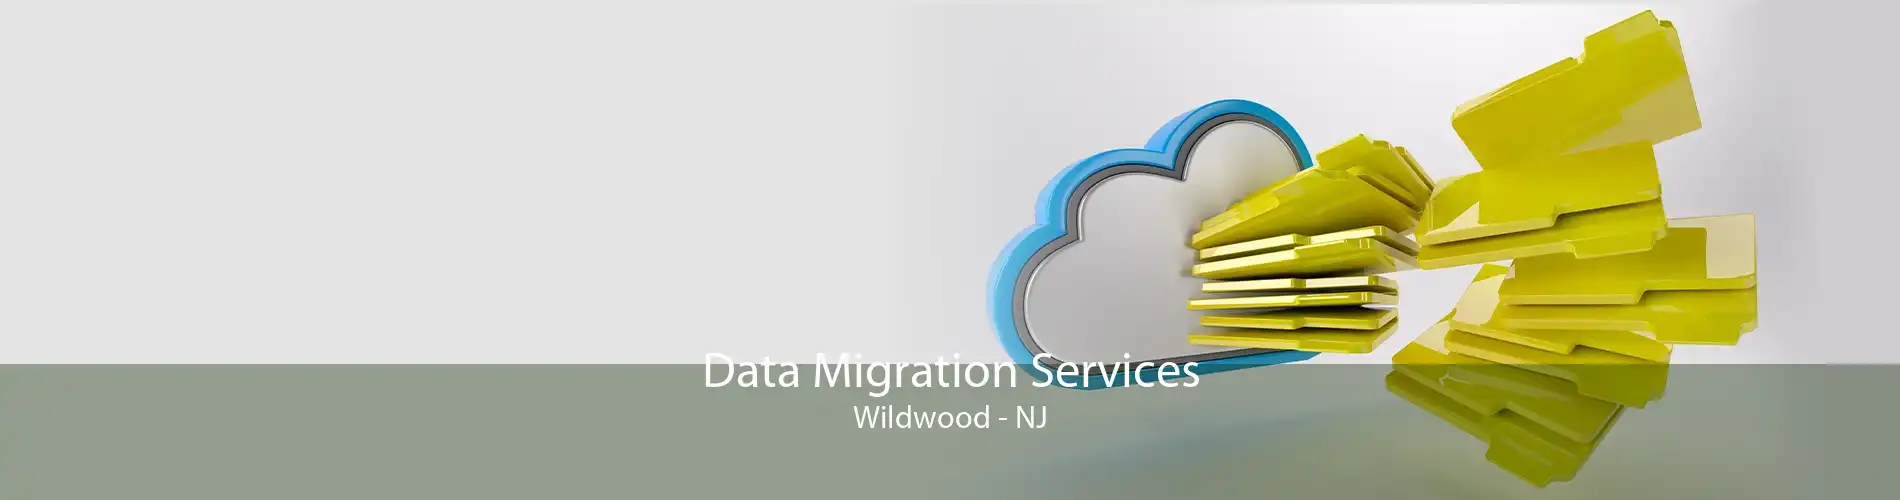 Data Migration Services Wildwood - NJ